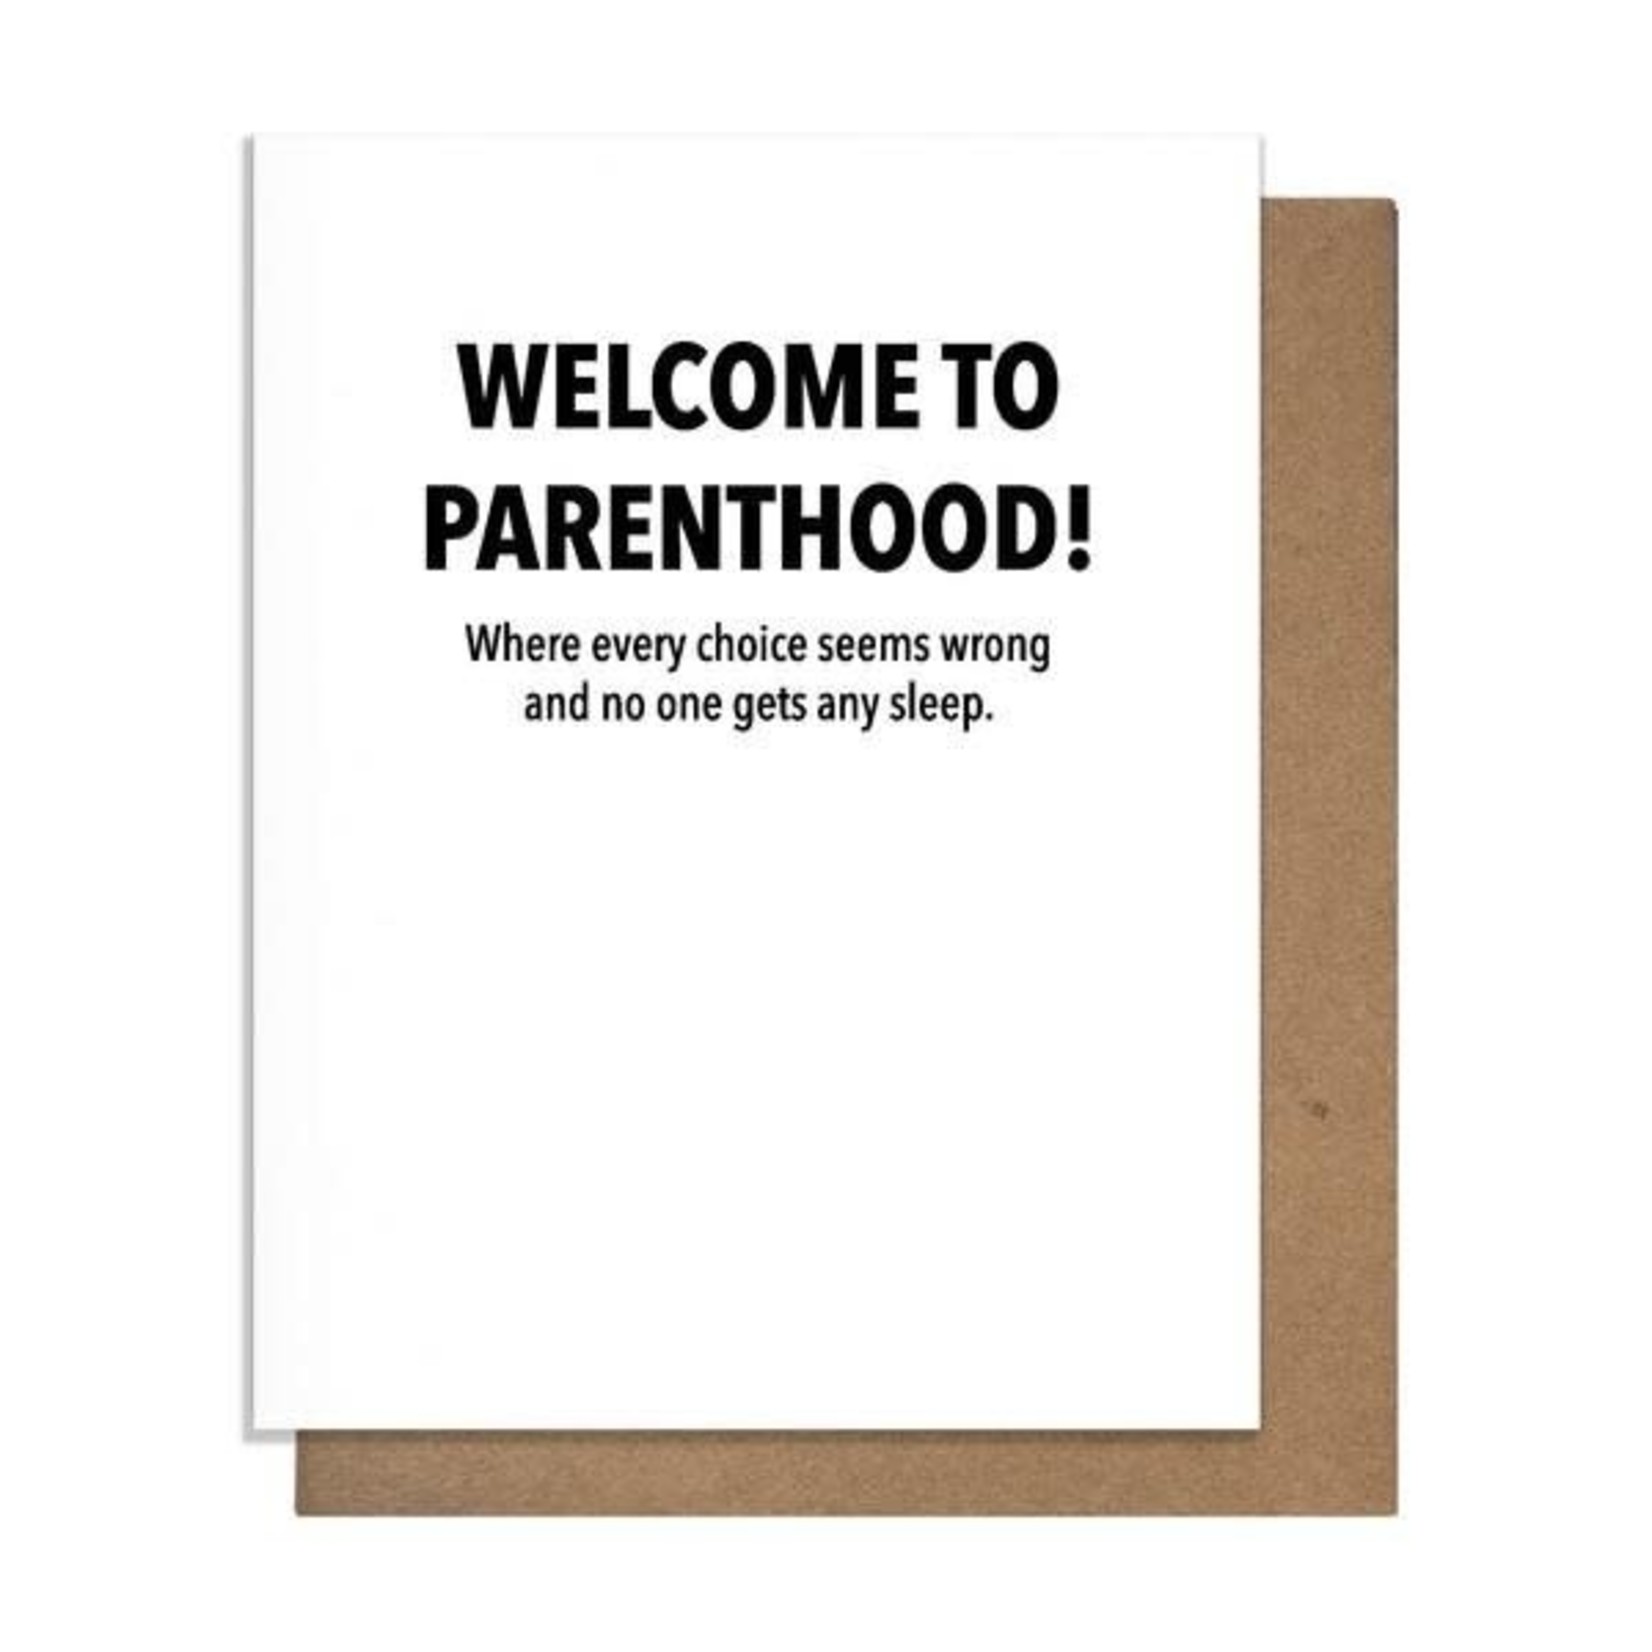 Pretty Alright Goods Parenthood Card